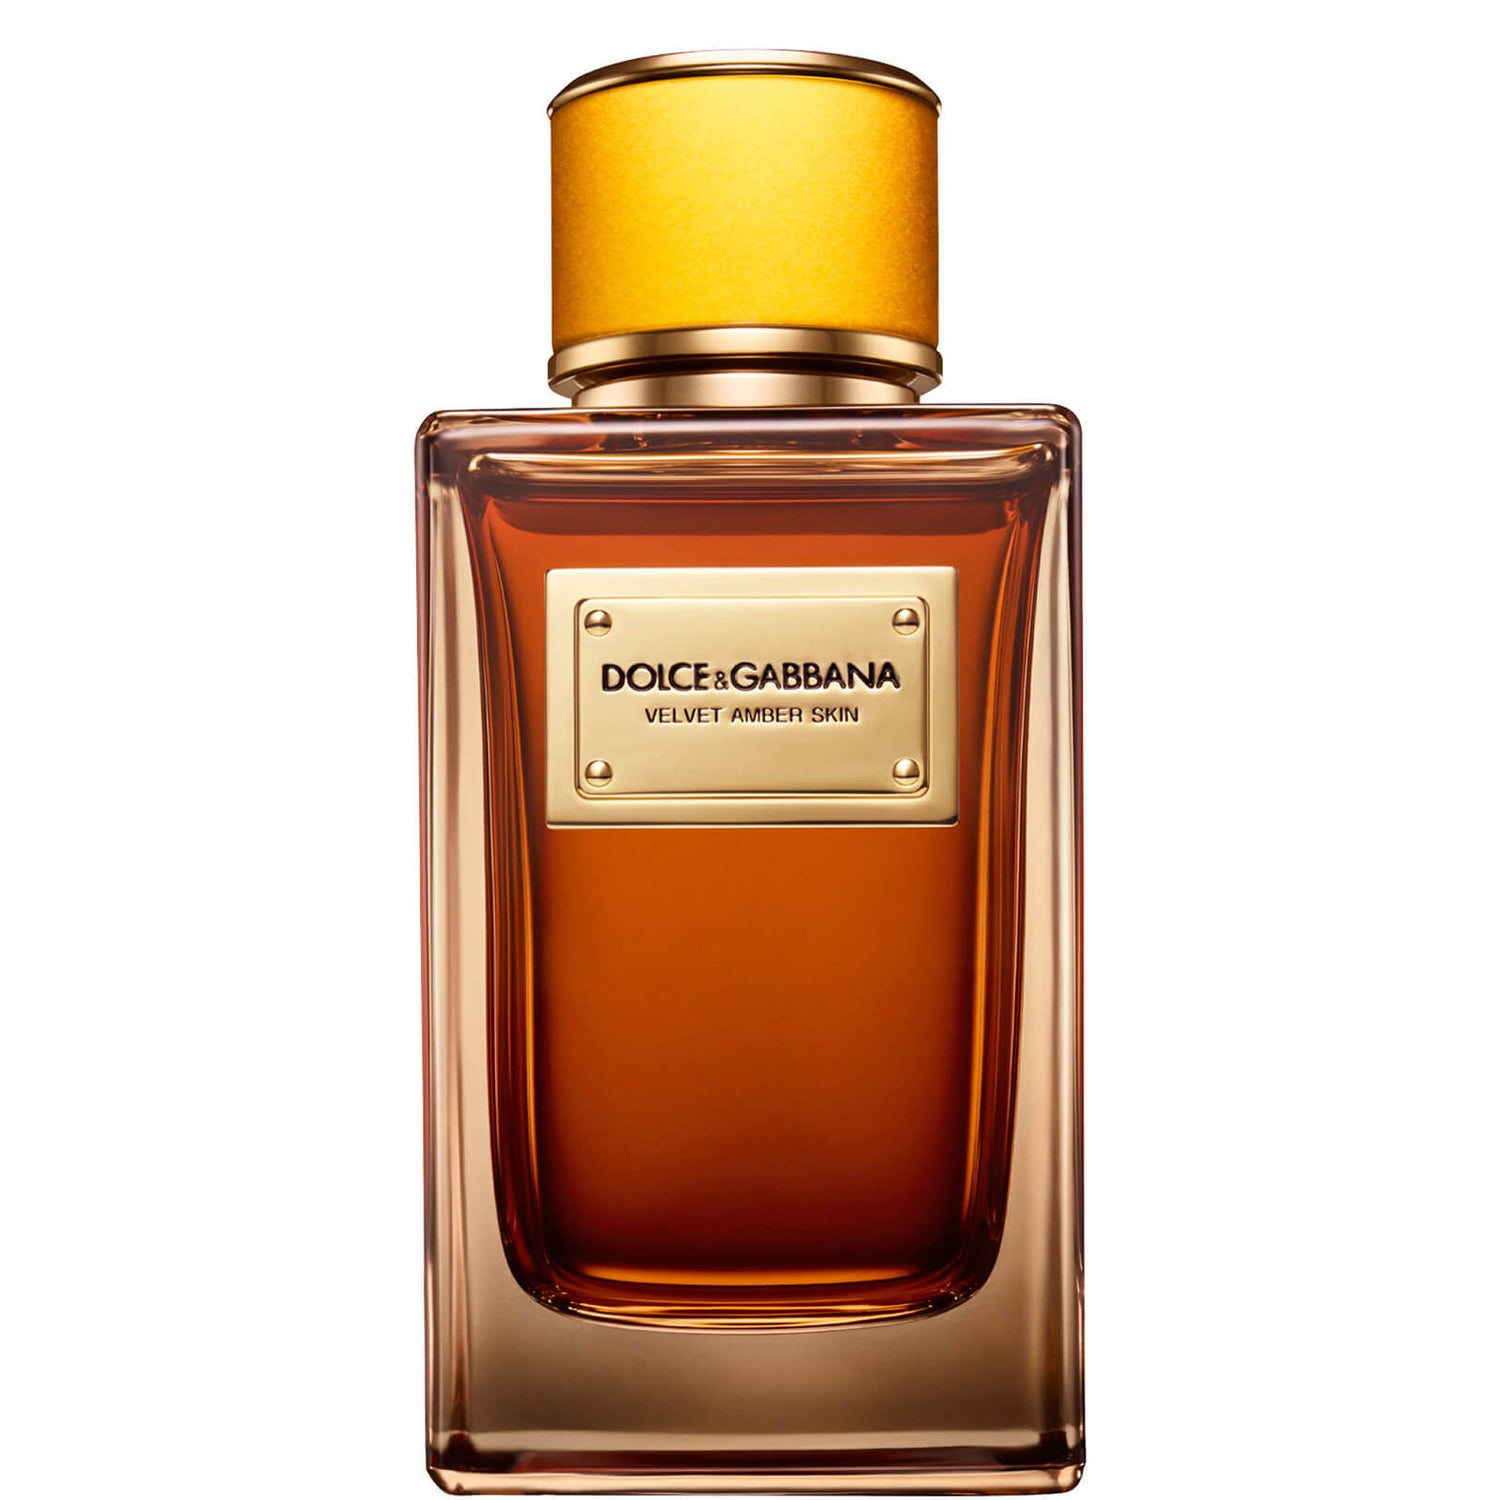 Dolce&Gabbana Velvet Amber Skin Eau de Parfum - 150 ml